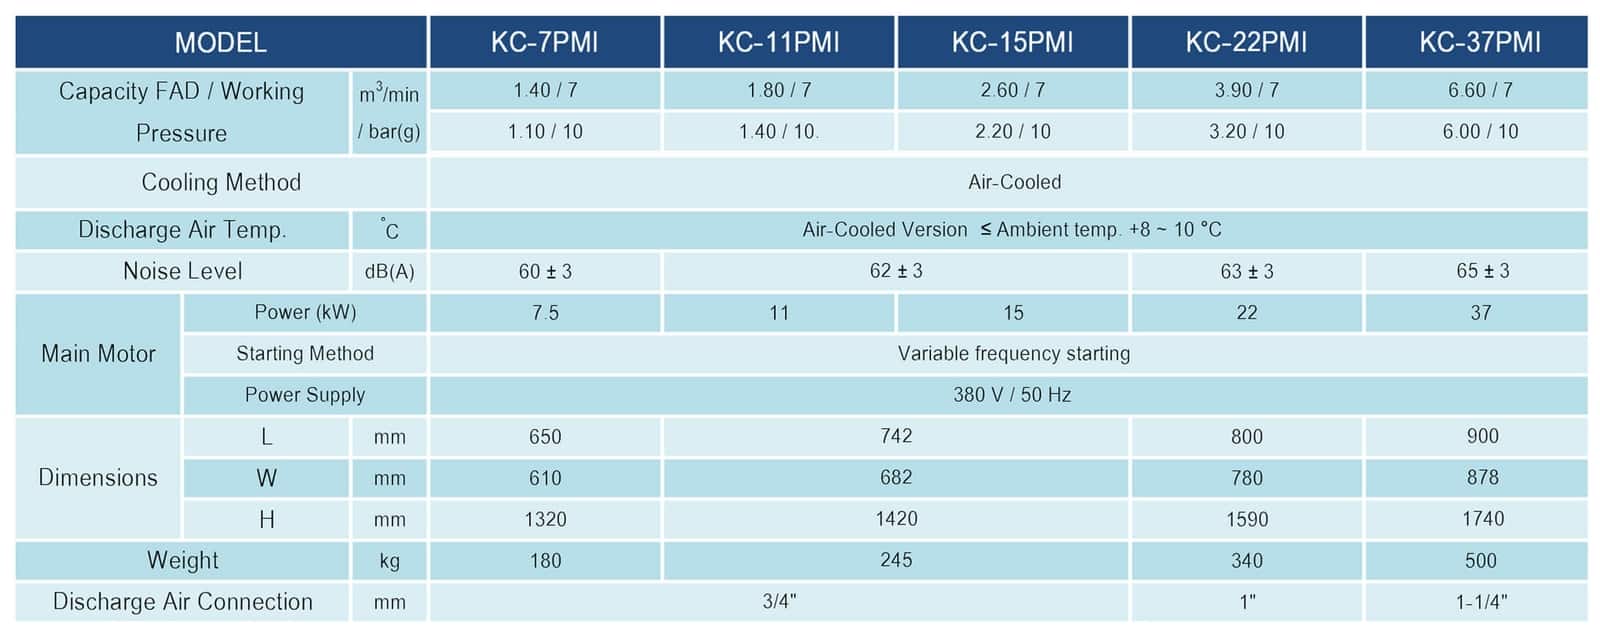 K4 - K55 Series (Small to Medium Capacity Models)